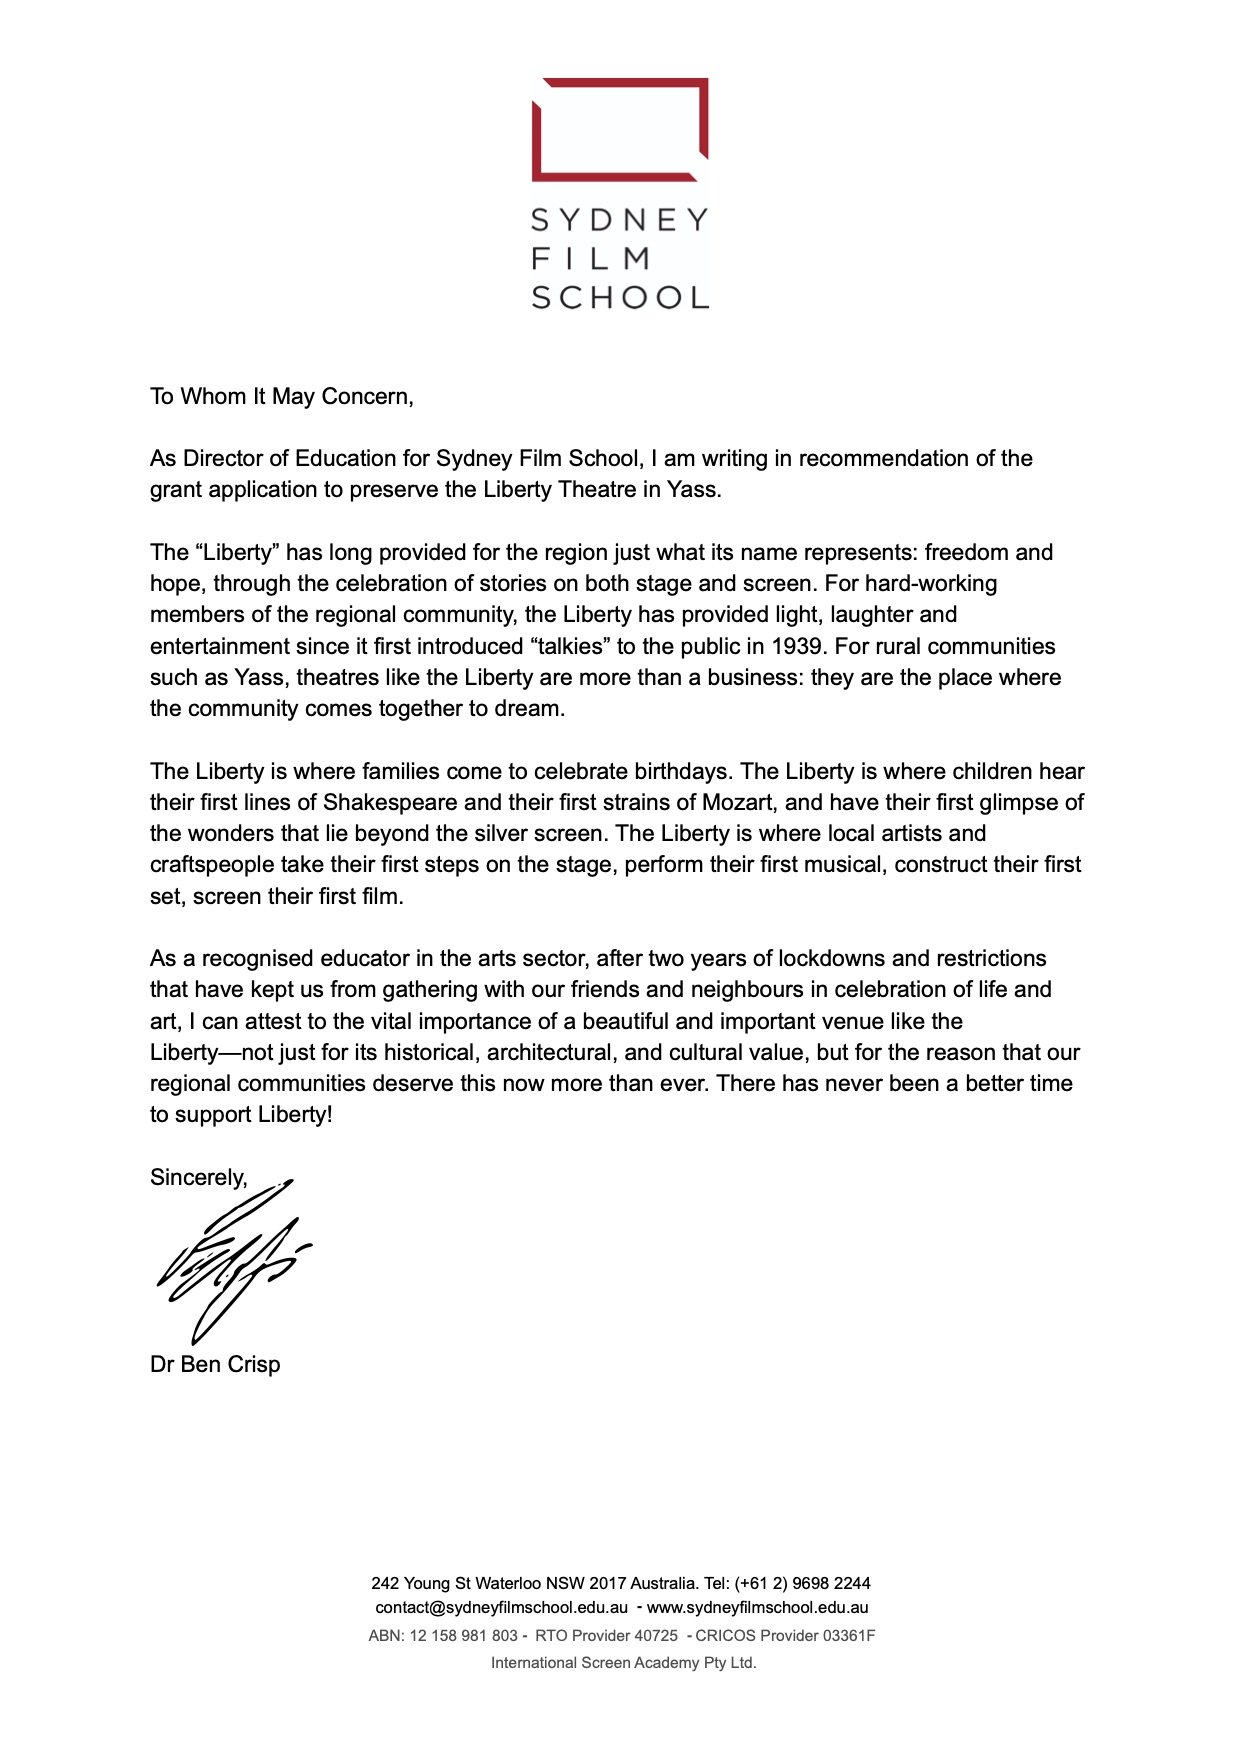 Sydney Film School FS Letter Of Support - Liberty Theatre Yass.jpg